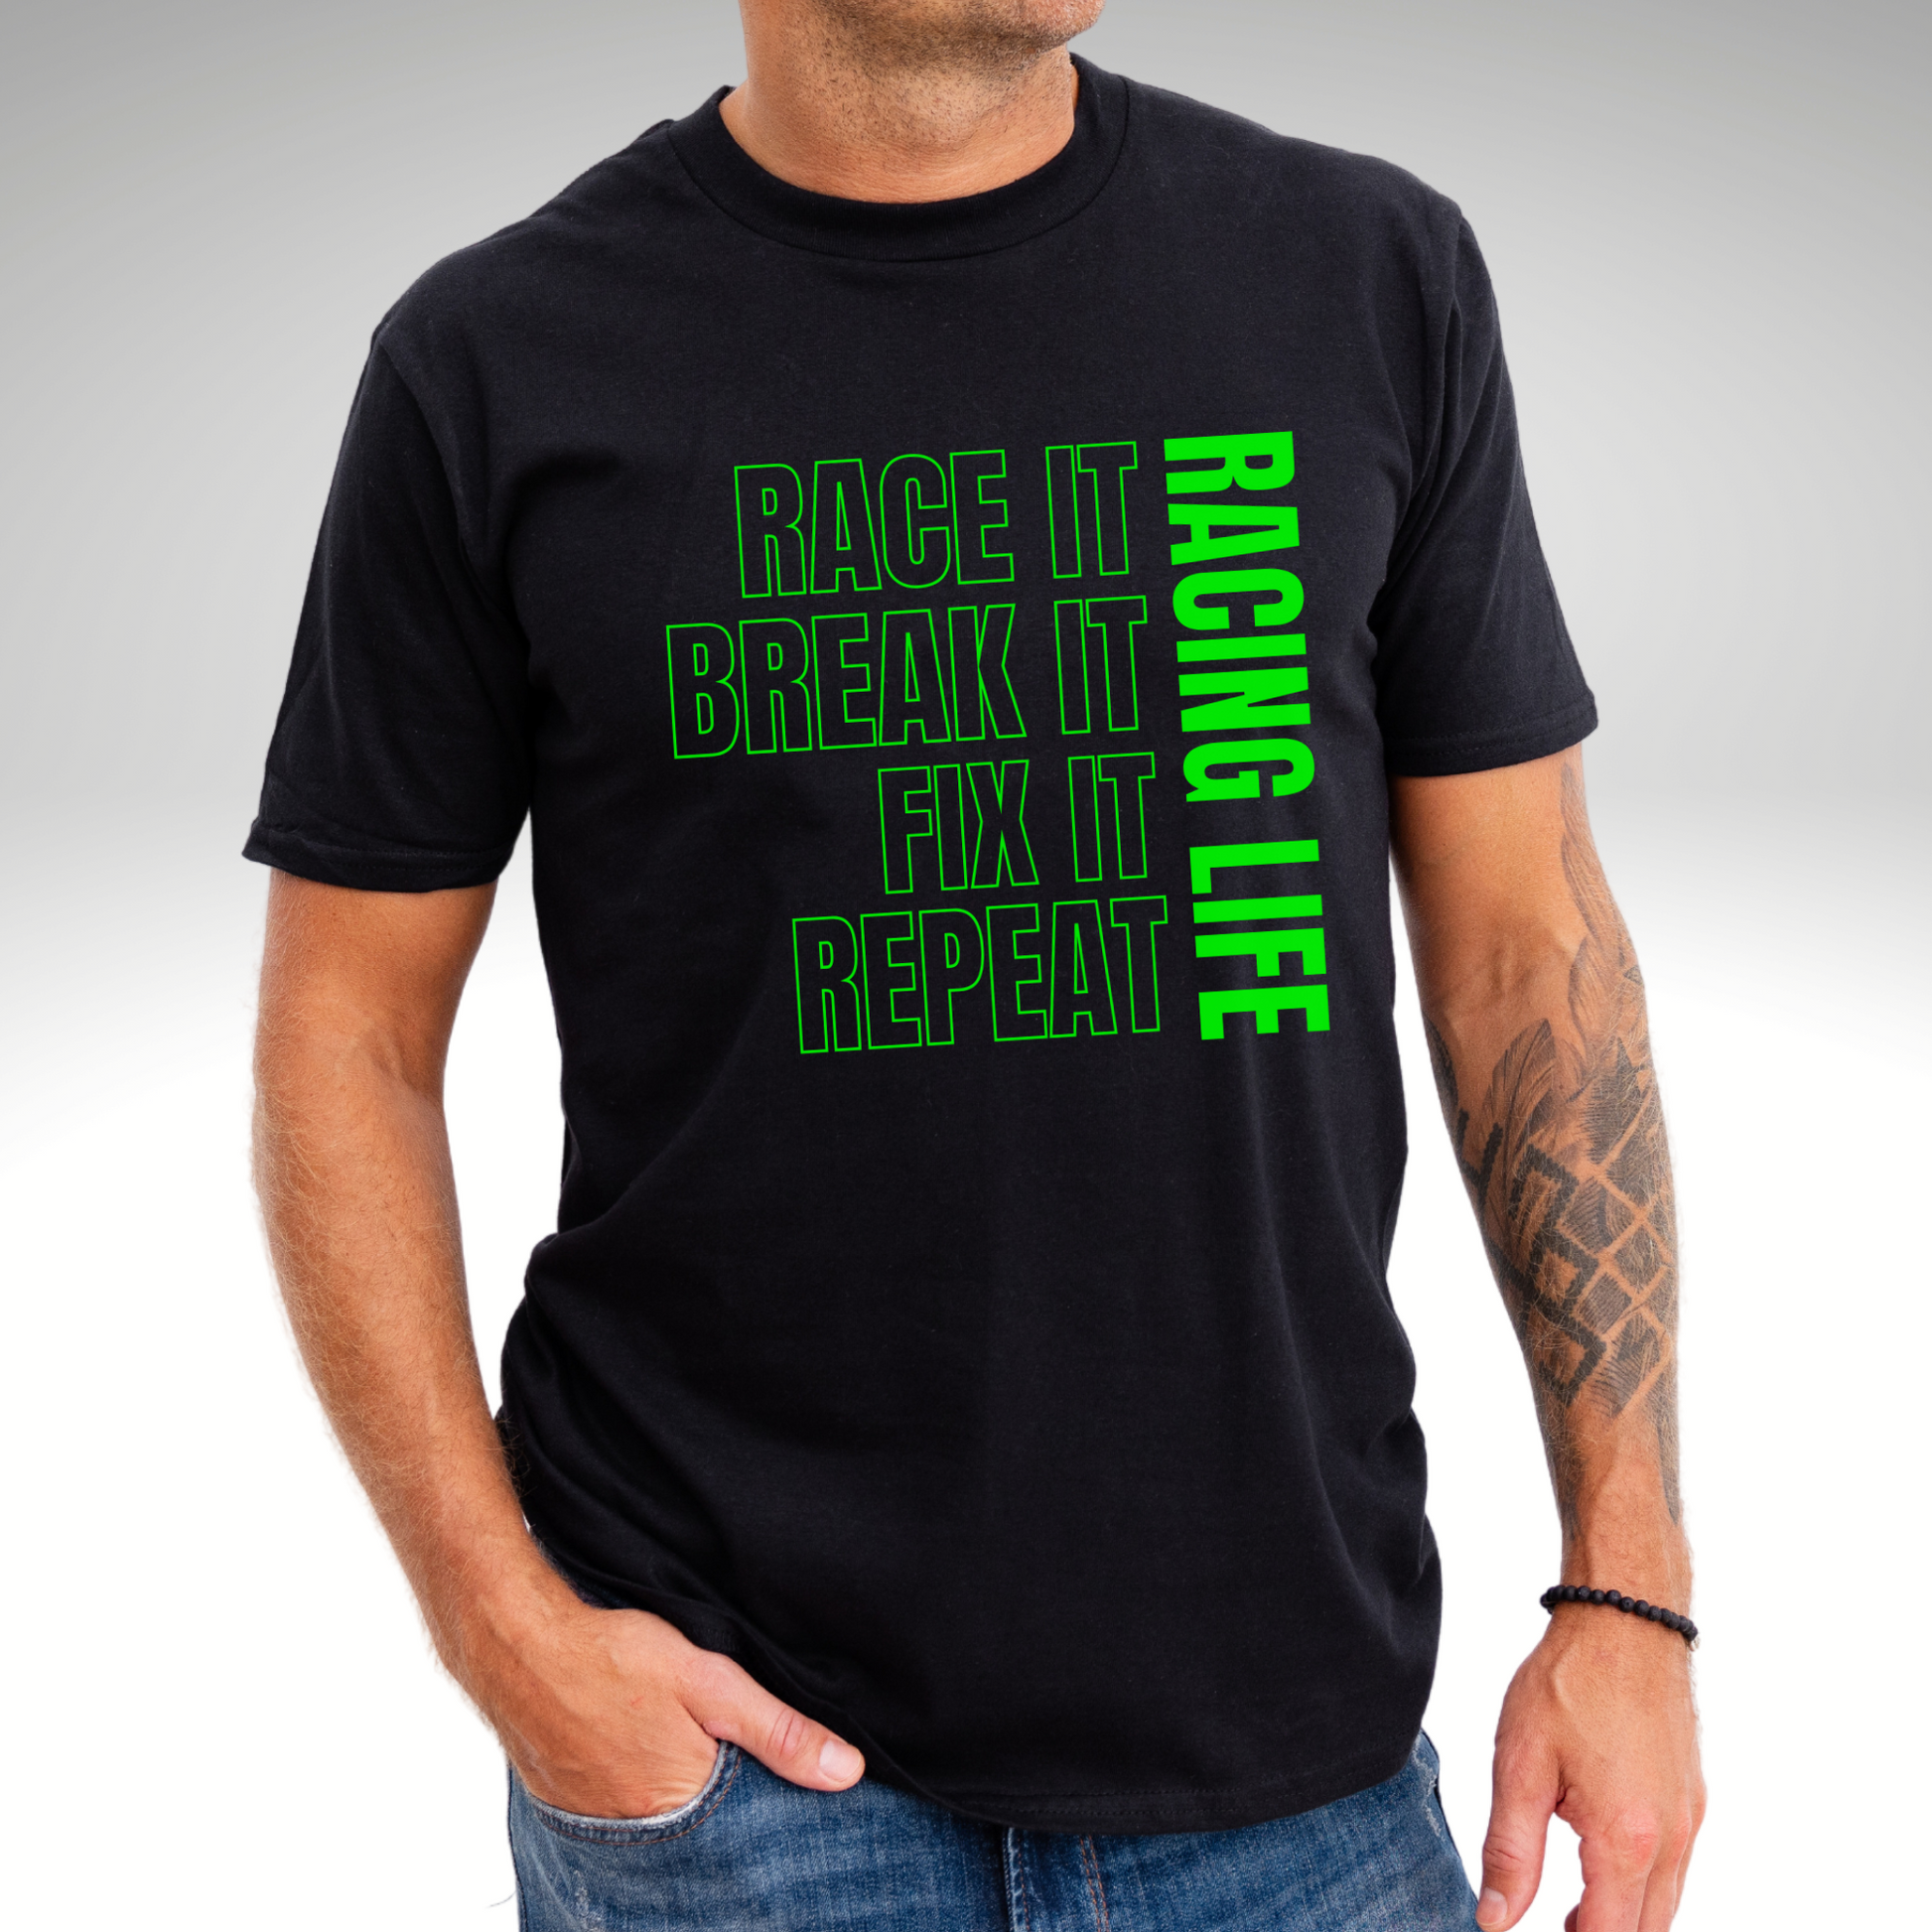 Race It Break It Fix It Repeat Racing Life T-shirts. Mens Dirt Track Racing Shirts 